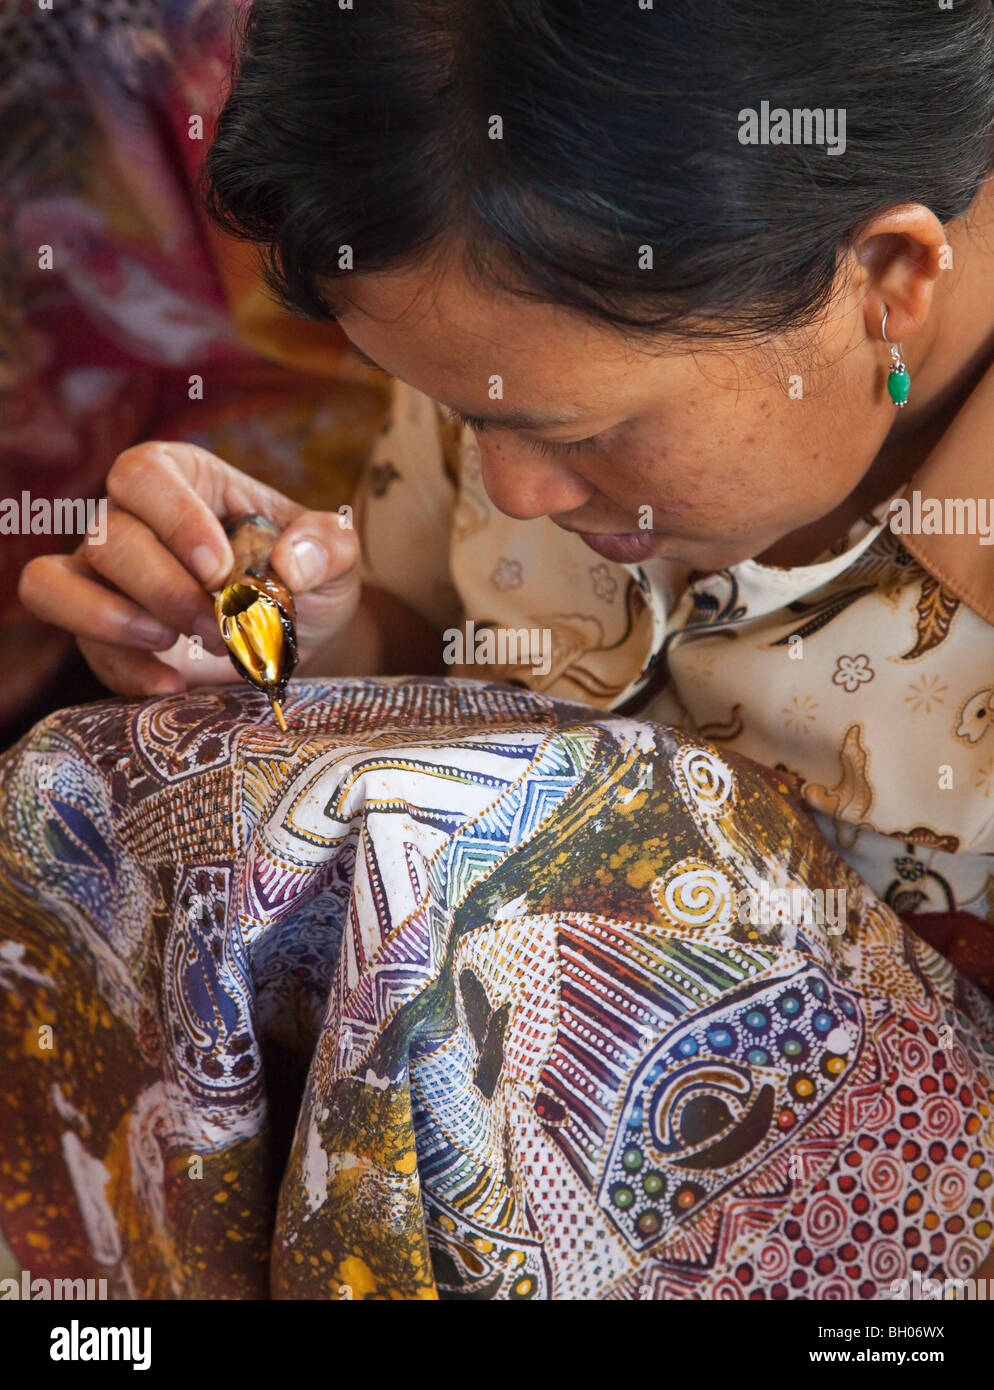 Batik craftwork, Bali. Applying hot wax 'resist' on fabric before selective dying Stock Photo